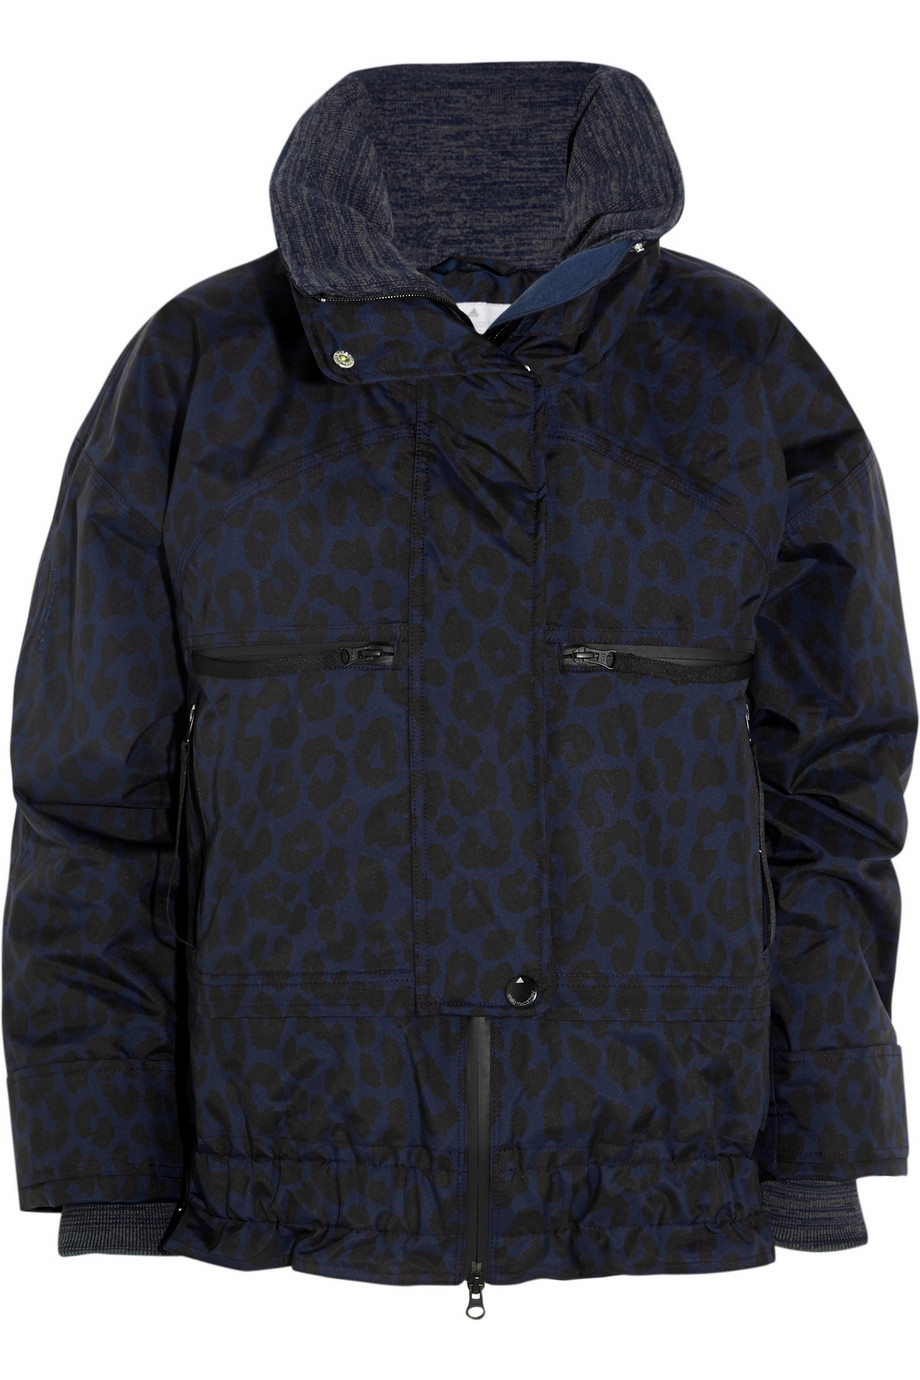 Lyst - Adidas By Stella Mccartney Ws Leopard-Print Climaproof® Storm ...